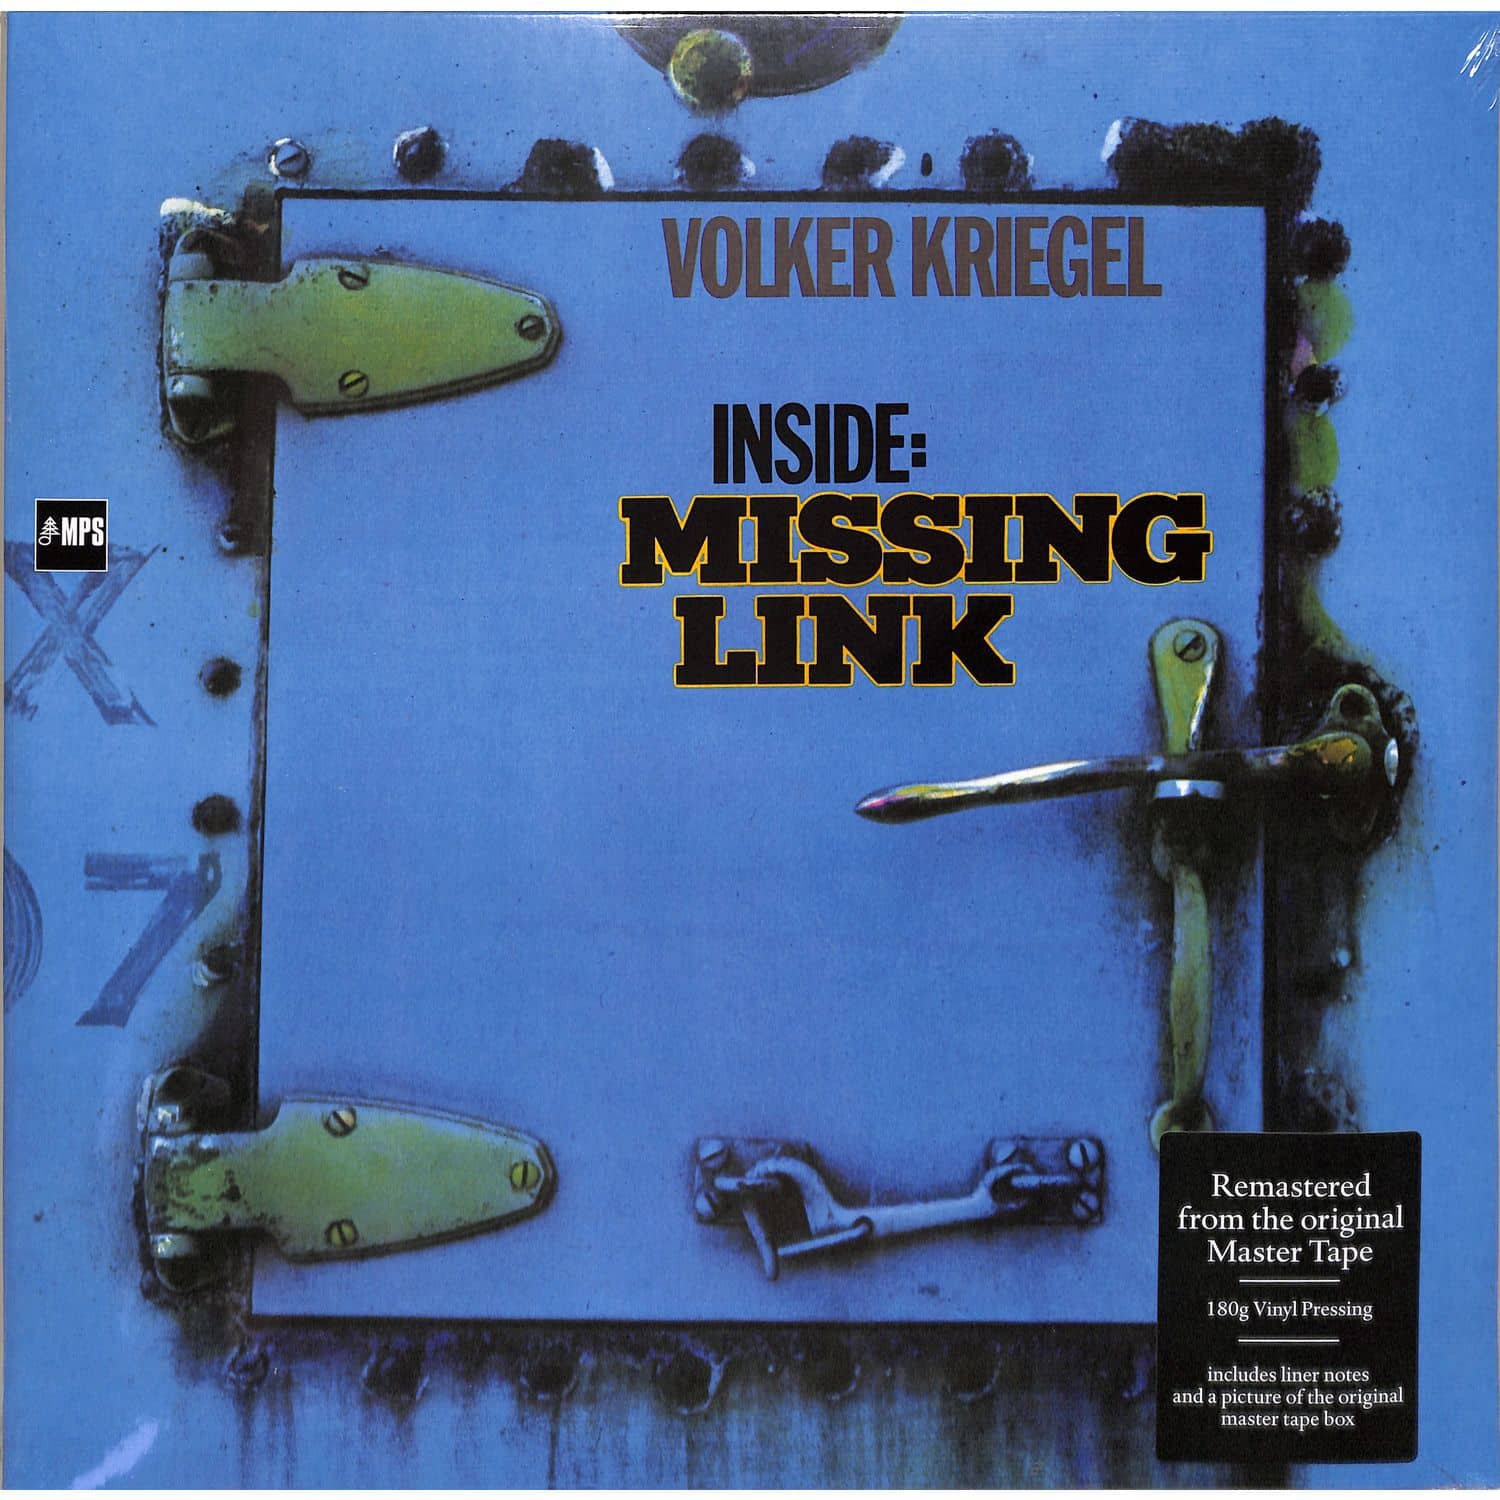  Volker Kriegel - INSIDE:MISSING LINK 